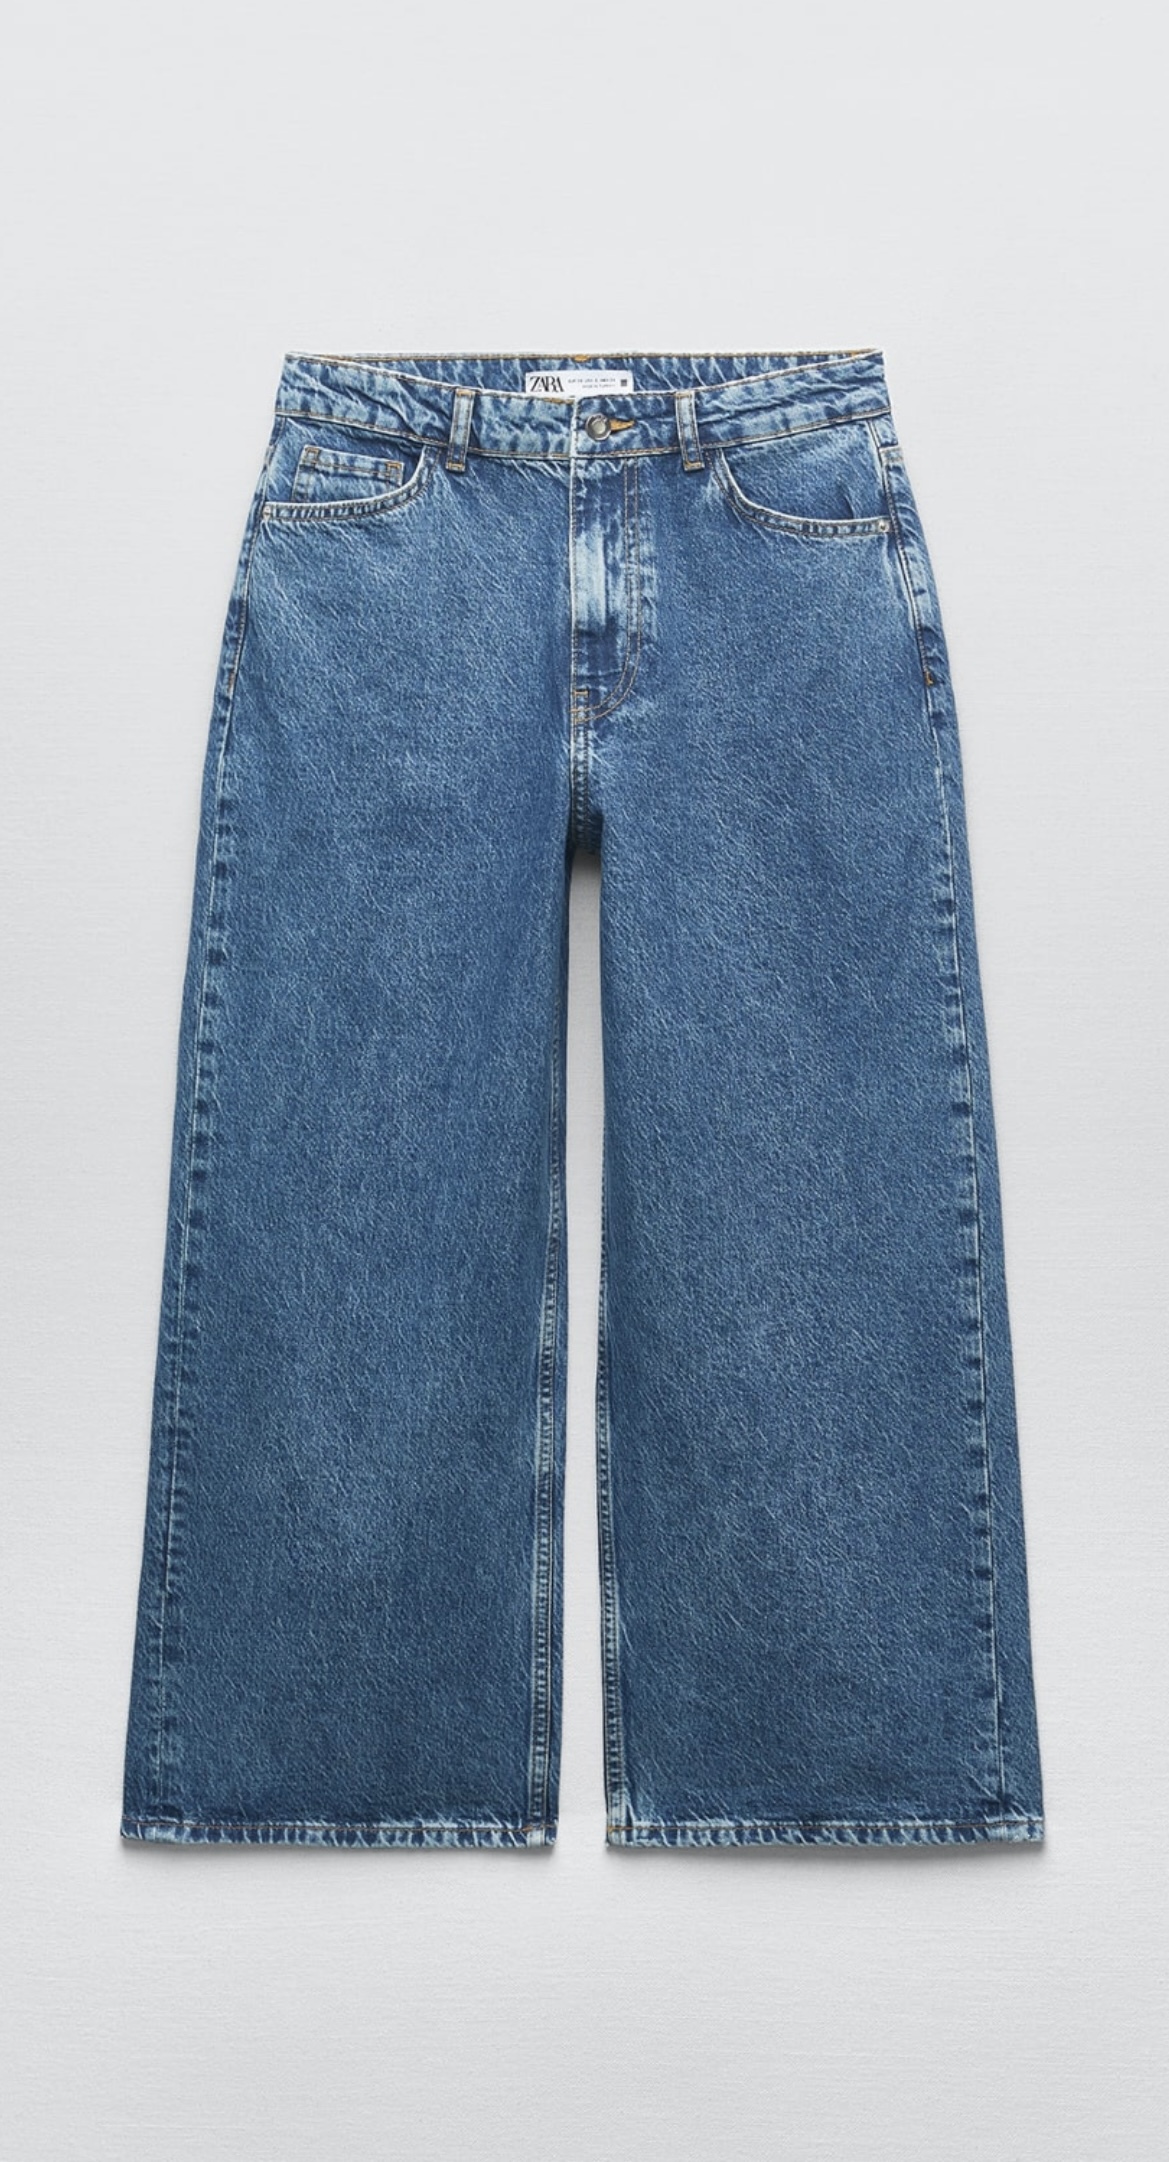 Jeans wide leg de Zara (25,95 euros).